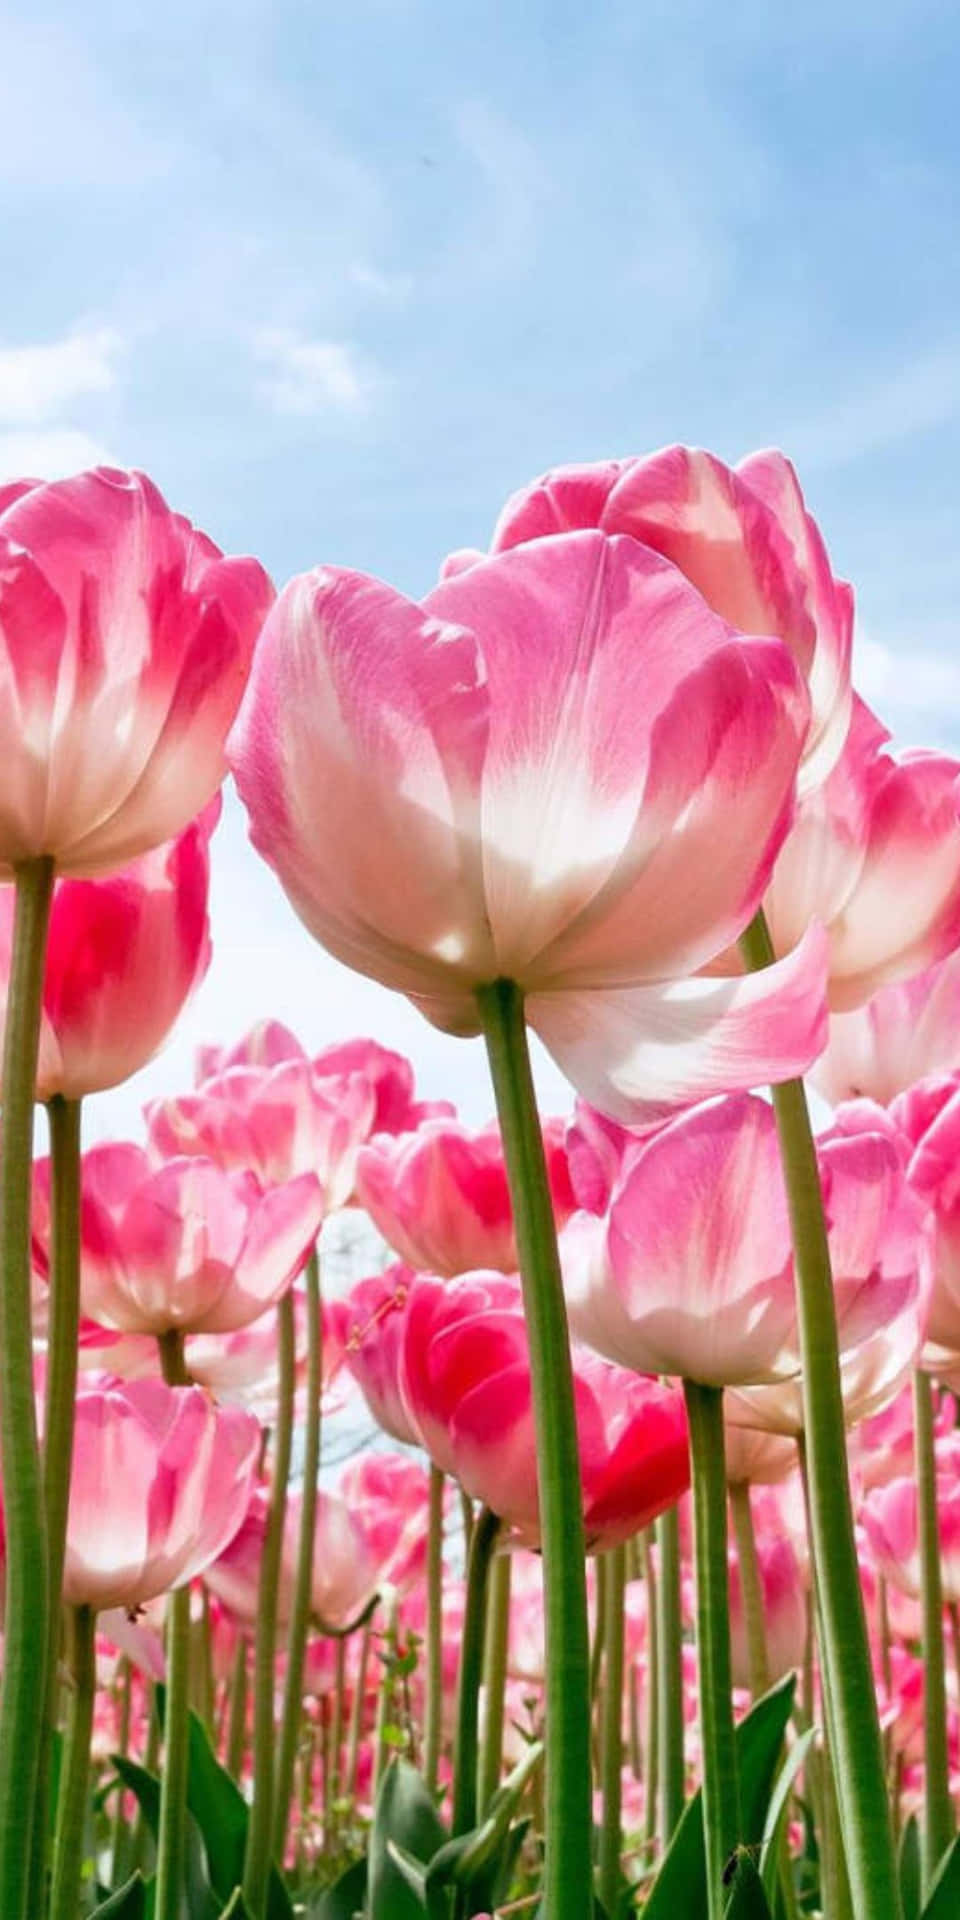 Pixel3 Flores De Tulipán Rosa En Un Fondo De Jardín